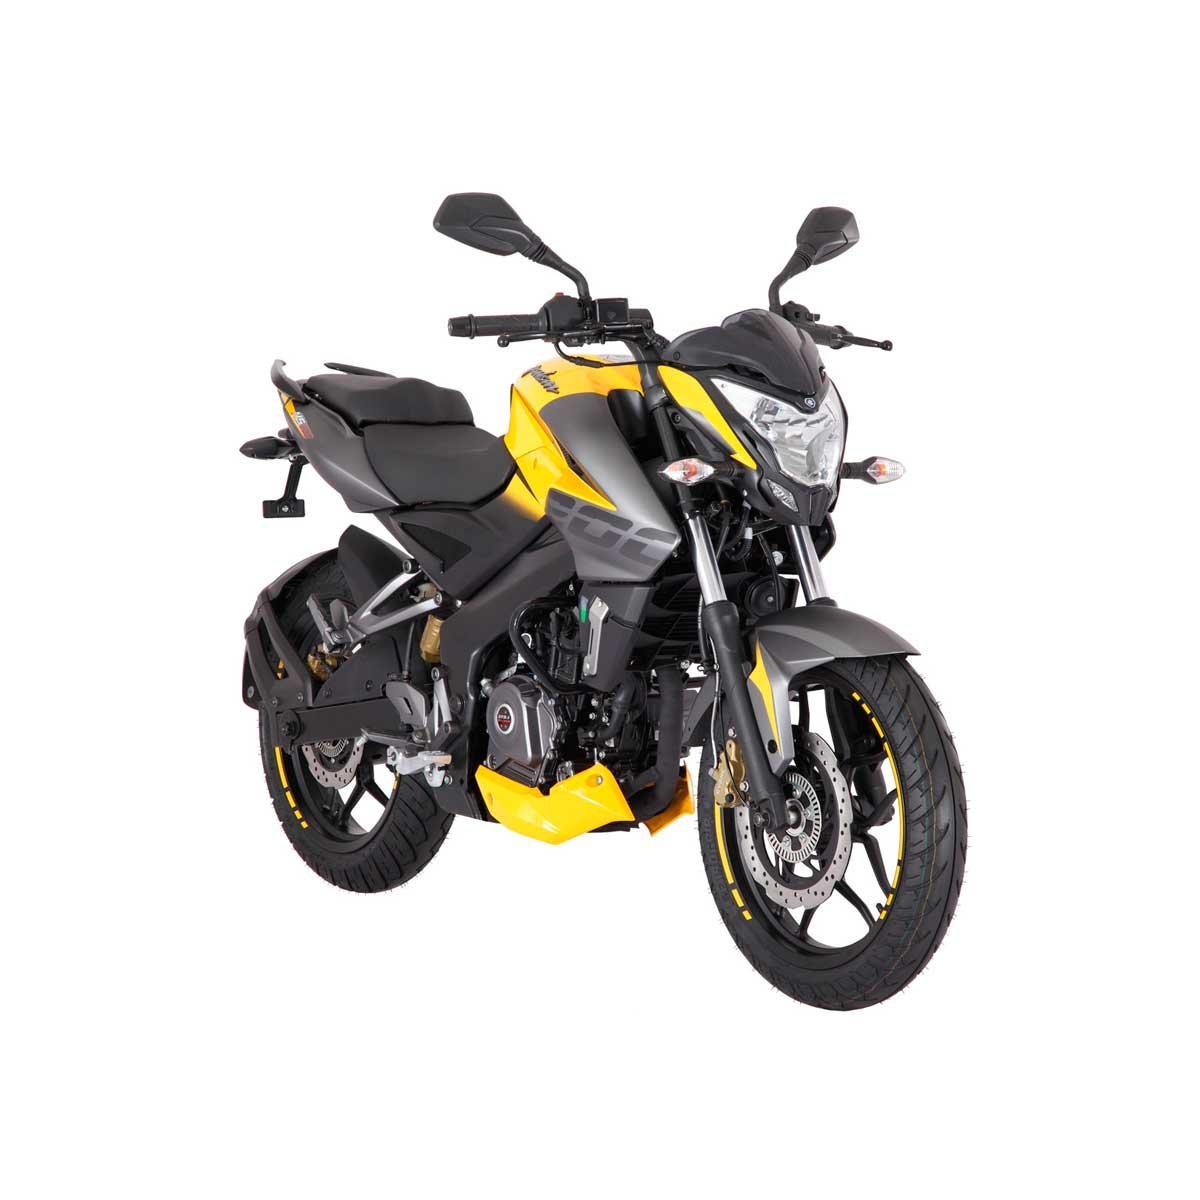 Motocicleta Pulsar Ns 200 Fi 2020 Amarillo Bajaj